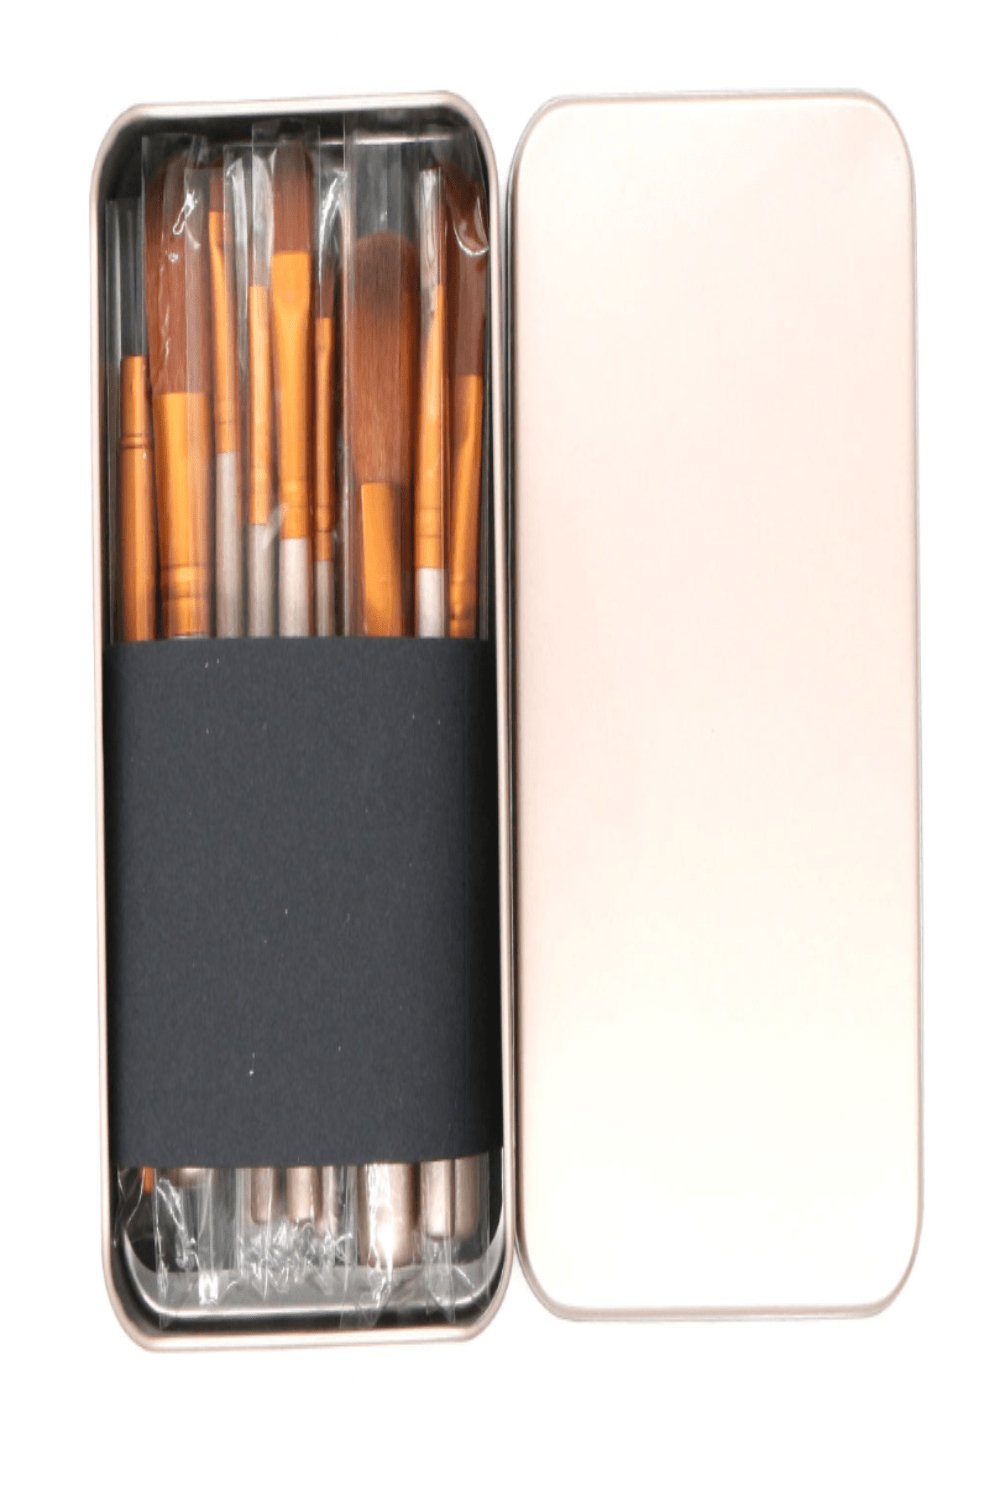 Bamboo Eco Friendly Makeup Brush Set - 12 Pack - TGC Boutique - Makeup Brush Set